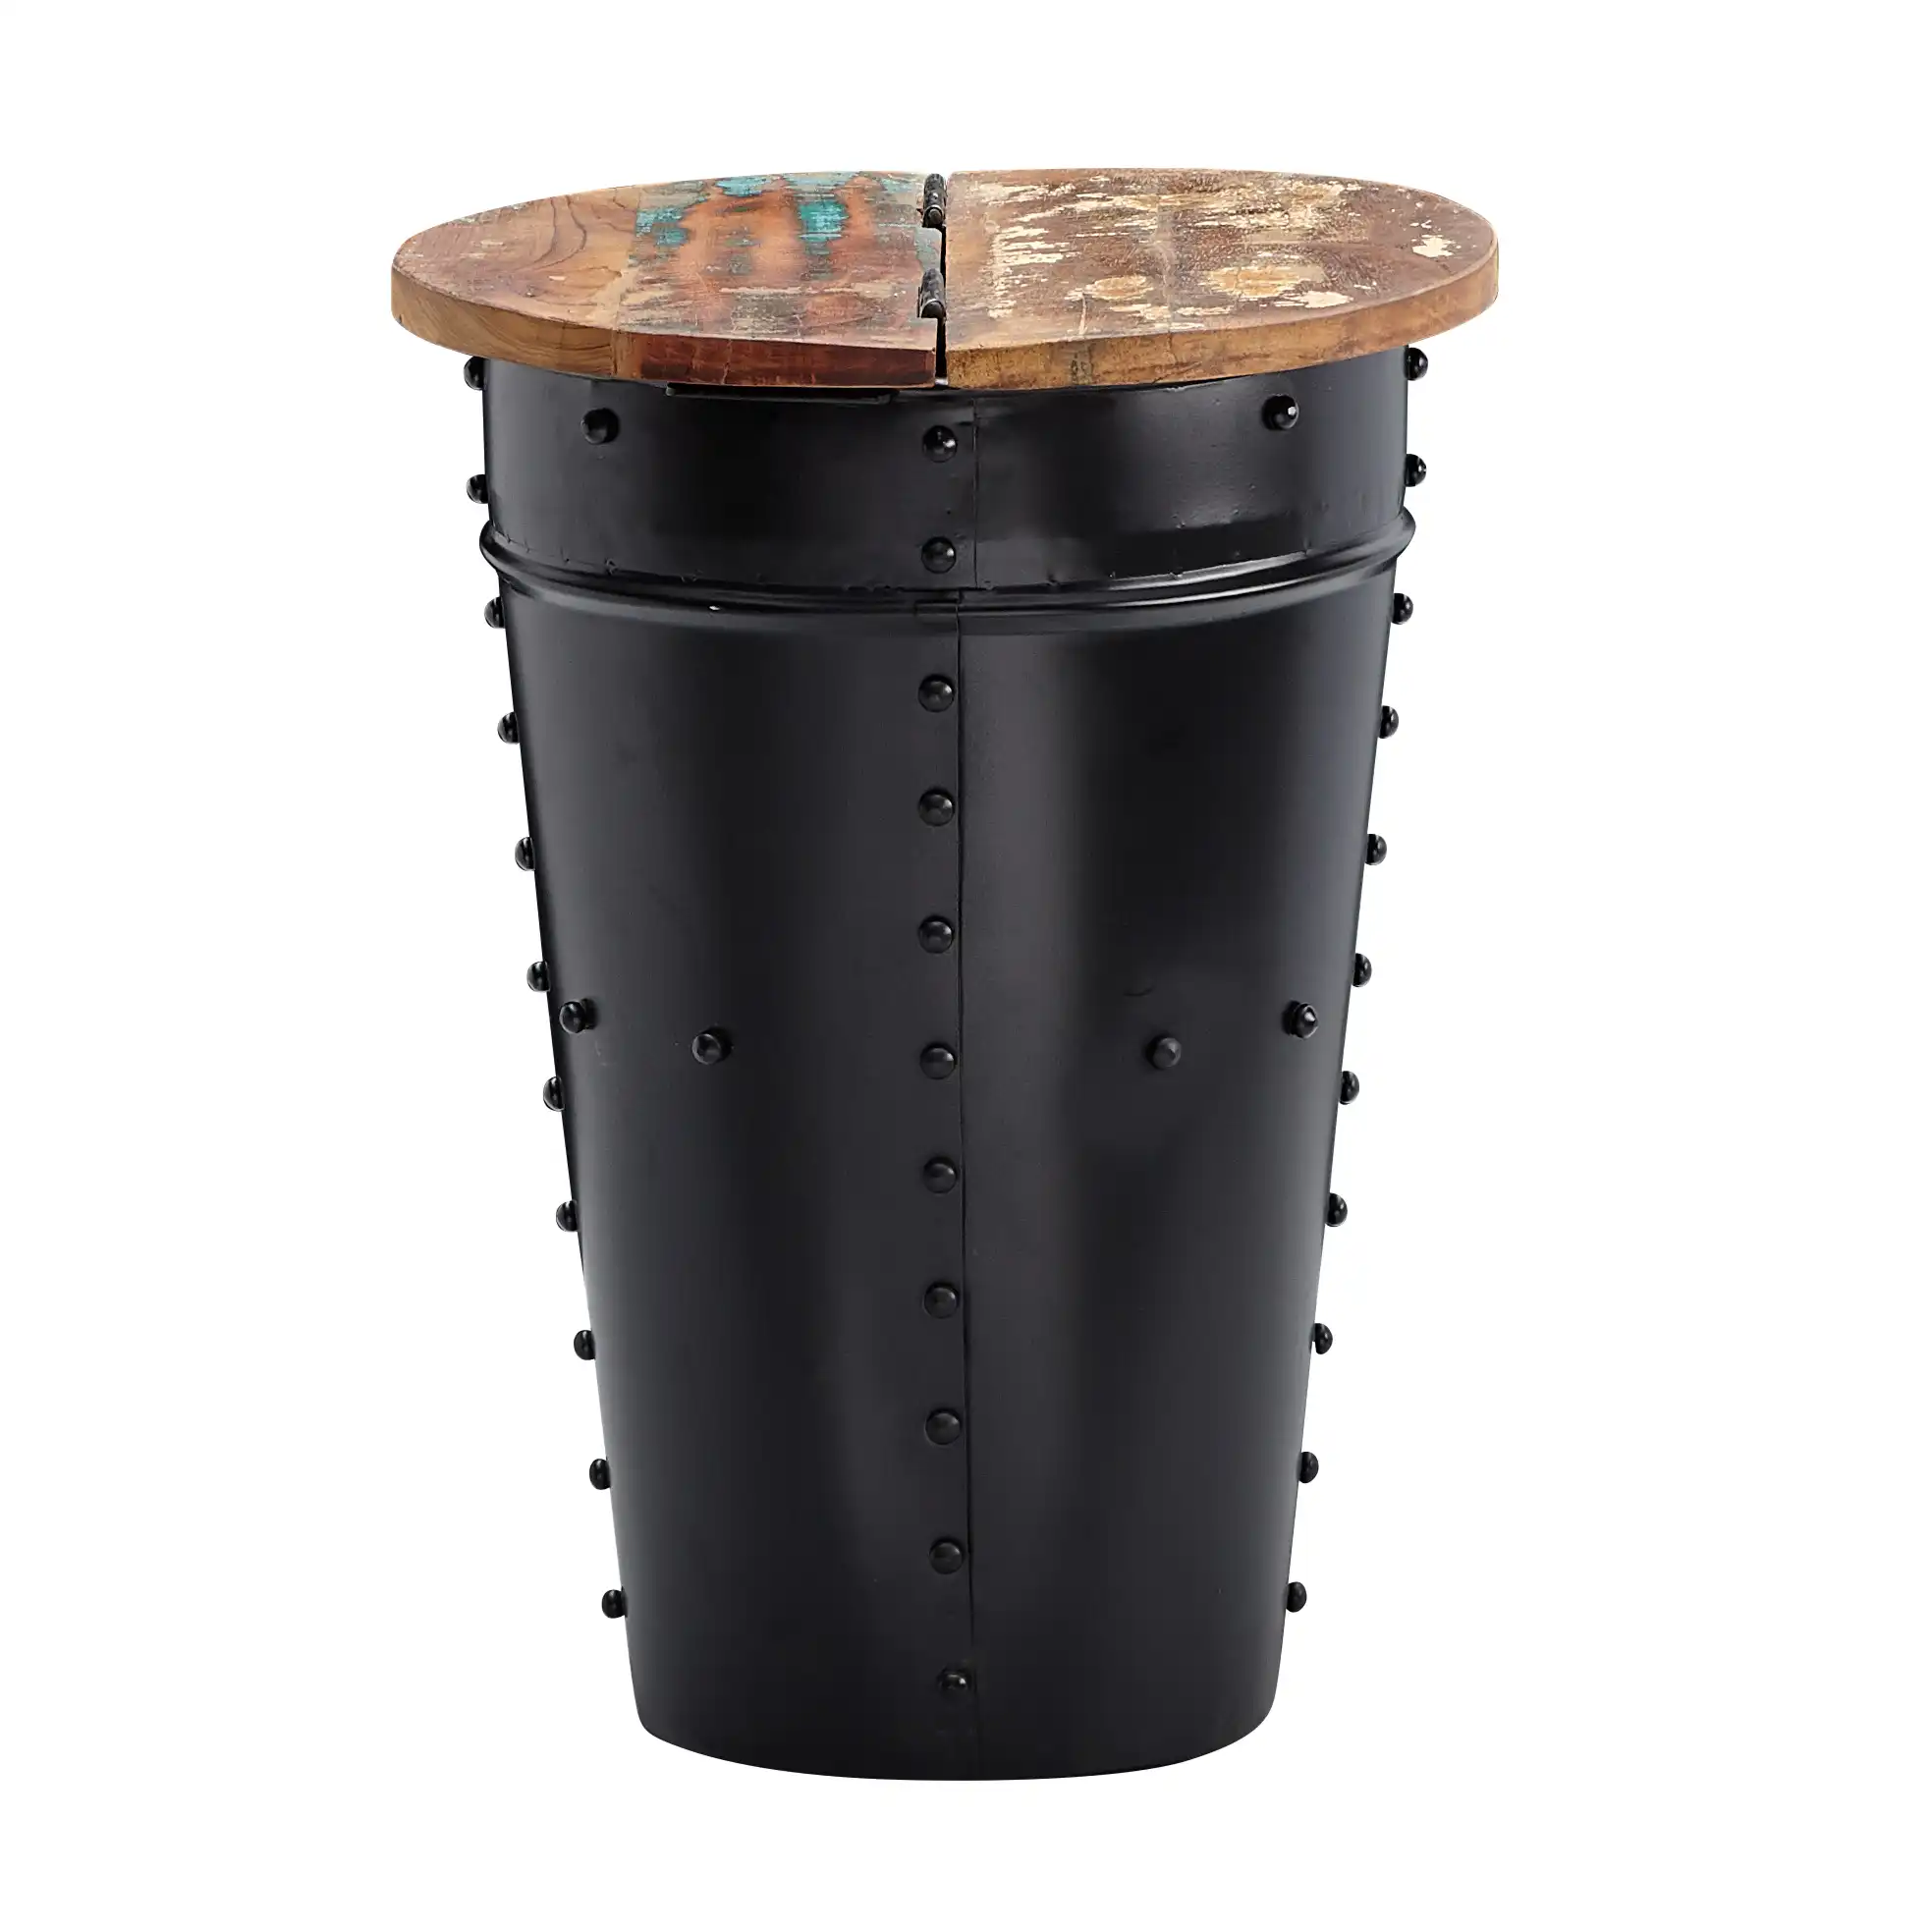 Iron Round Coffee Table with Wooden Top & Storage - Black - popular handicrafts